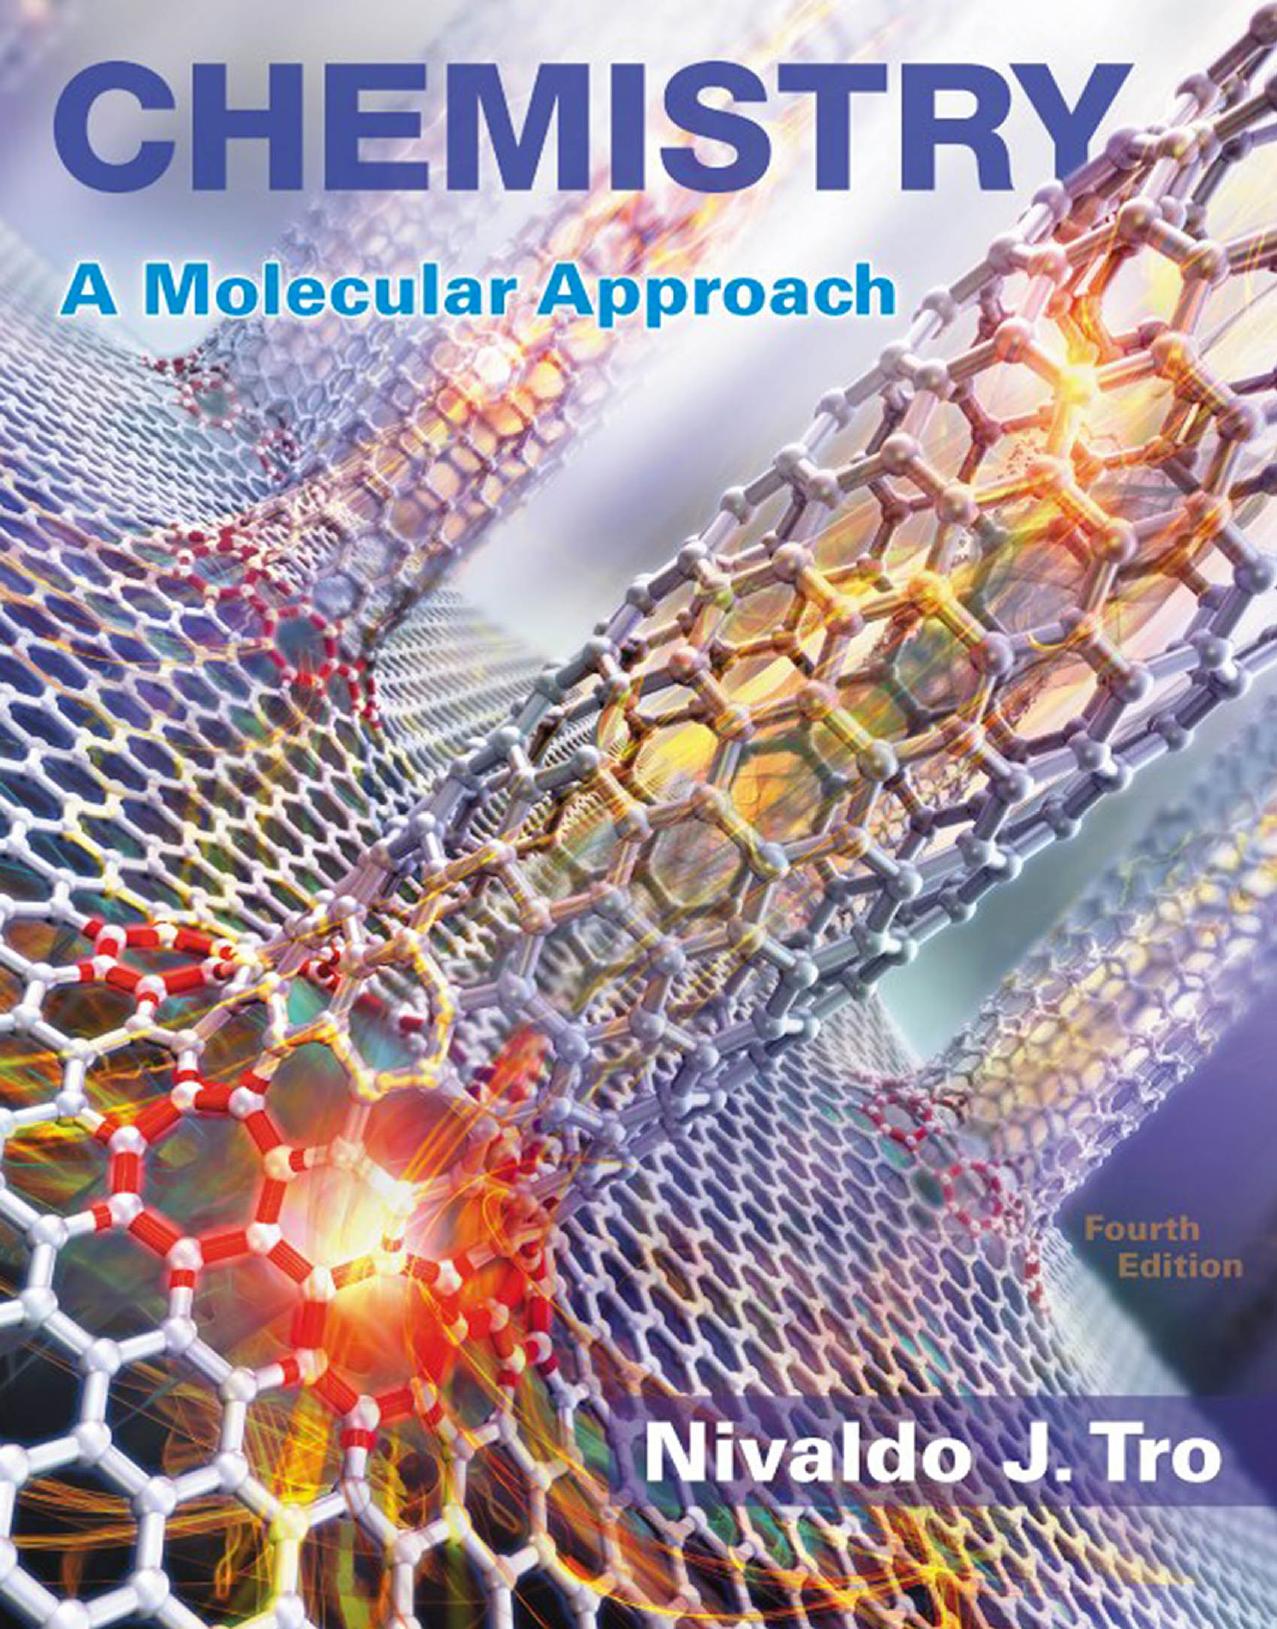 Chemistry A Molecular Approach 4th Edition by Nivaldo J. Tro.jpg